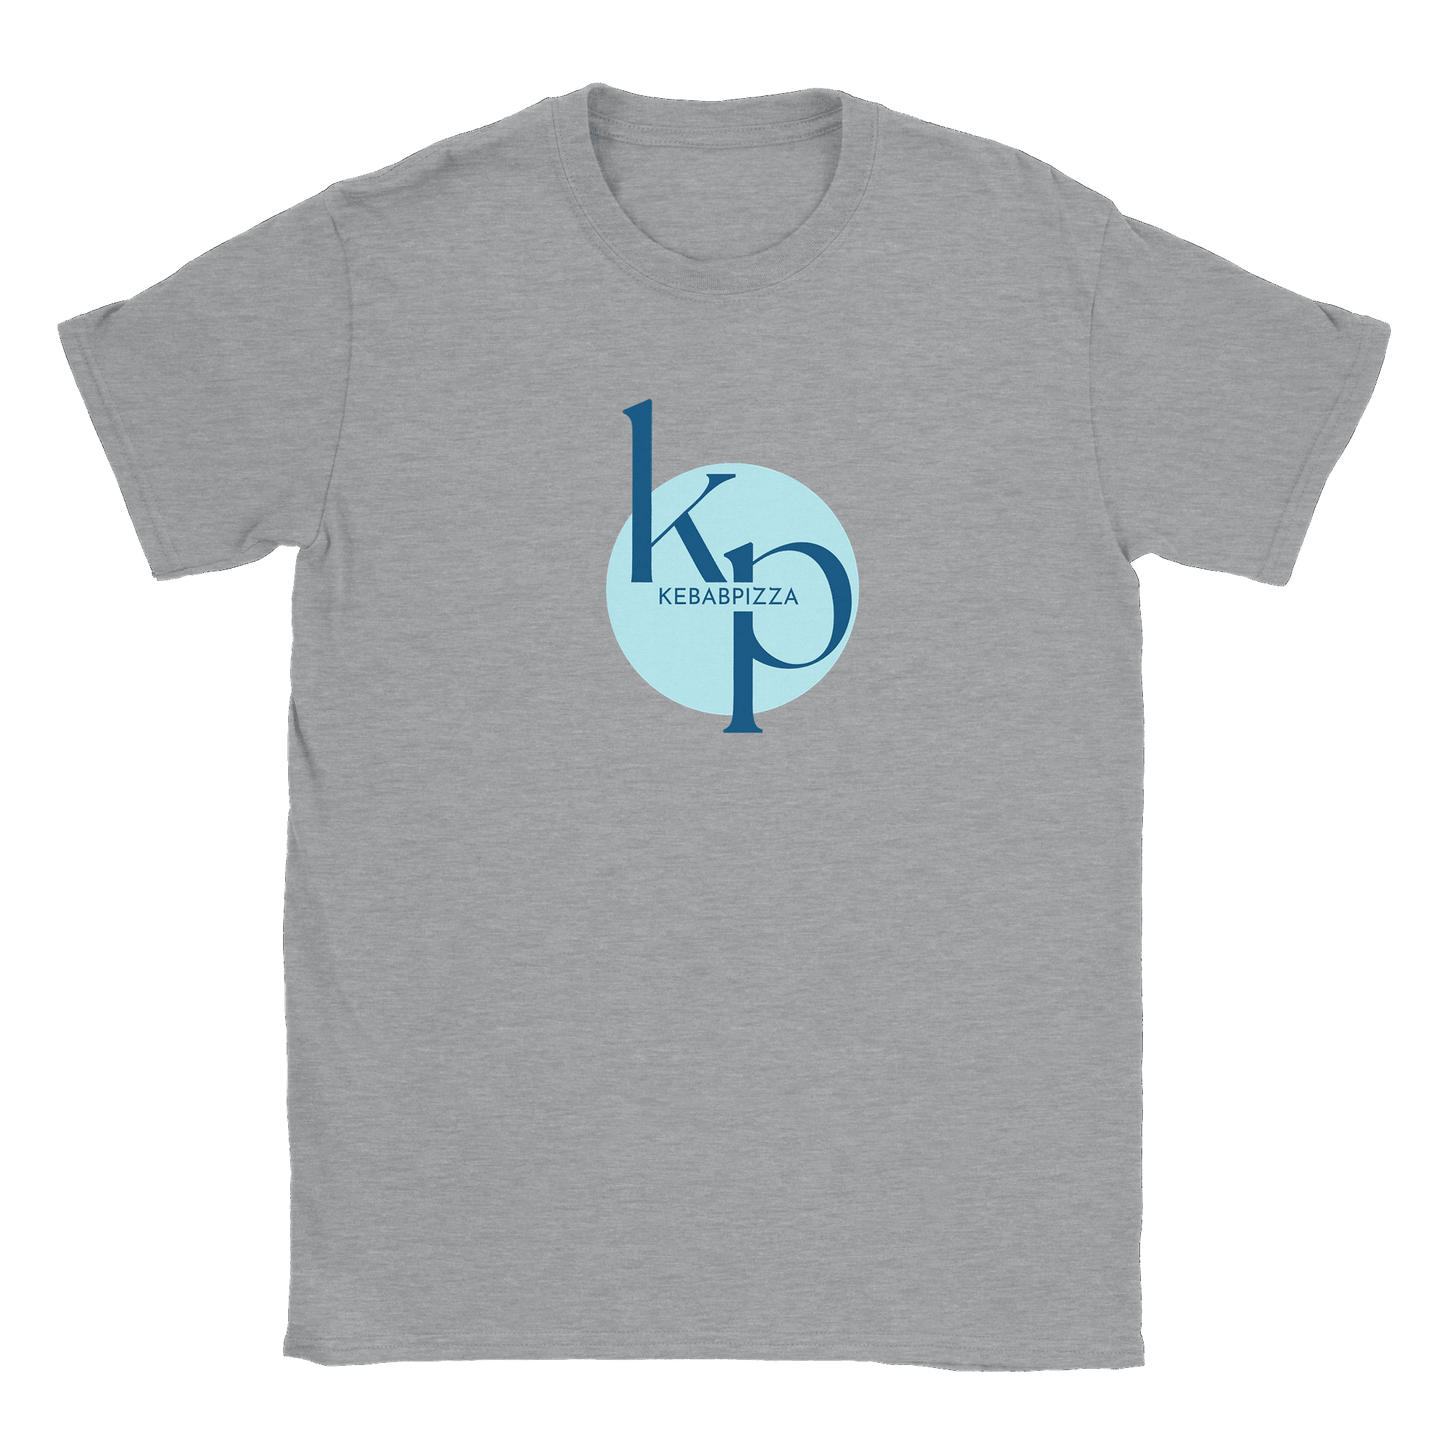 Kebabpizza - T-shirt Sports Grey